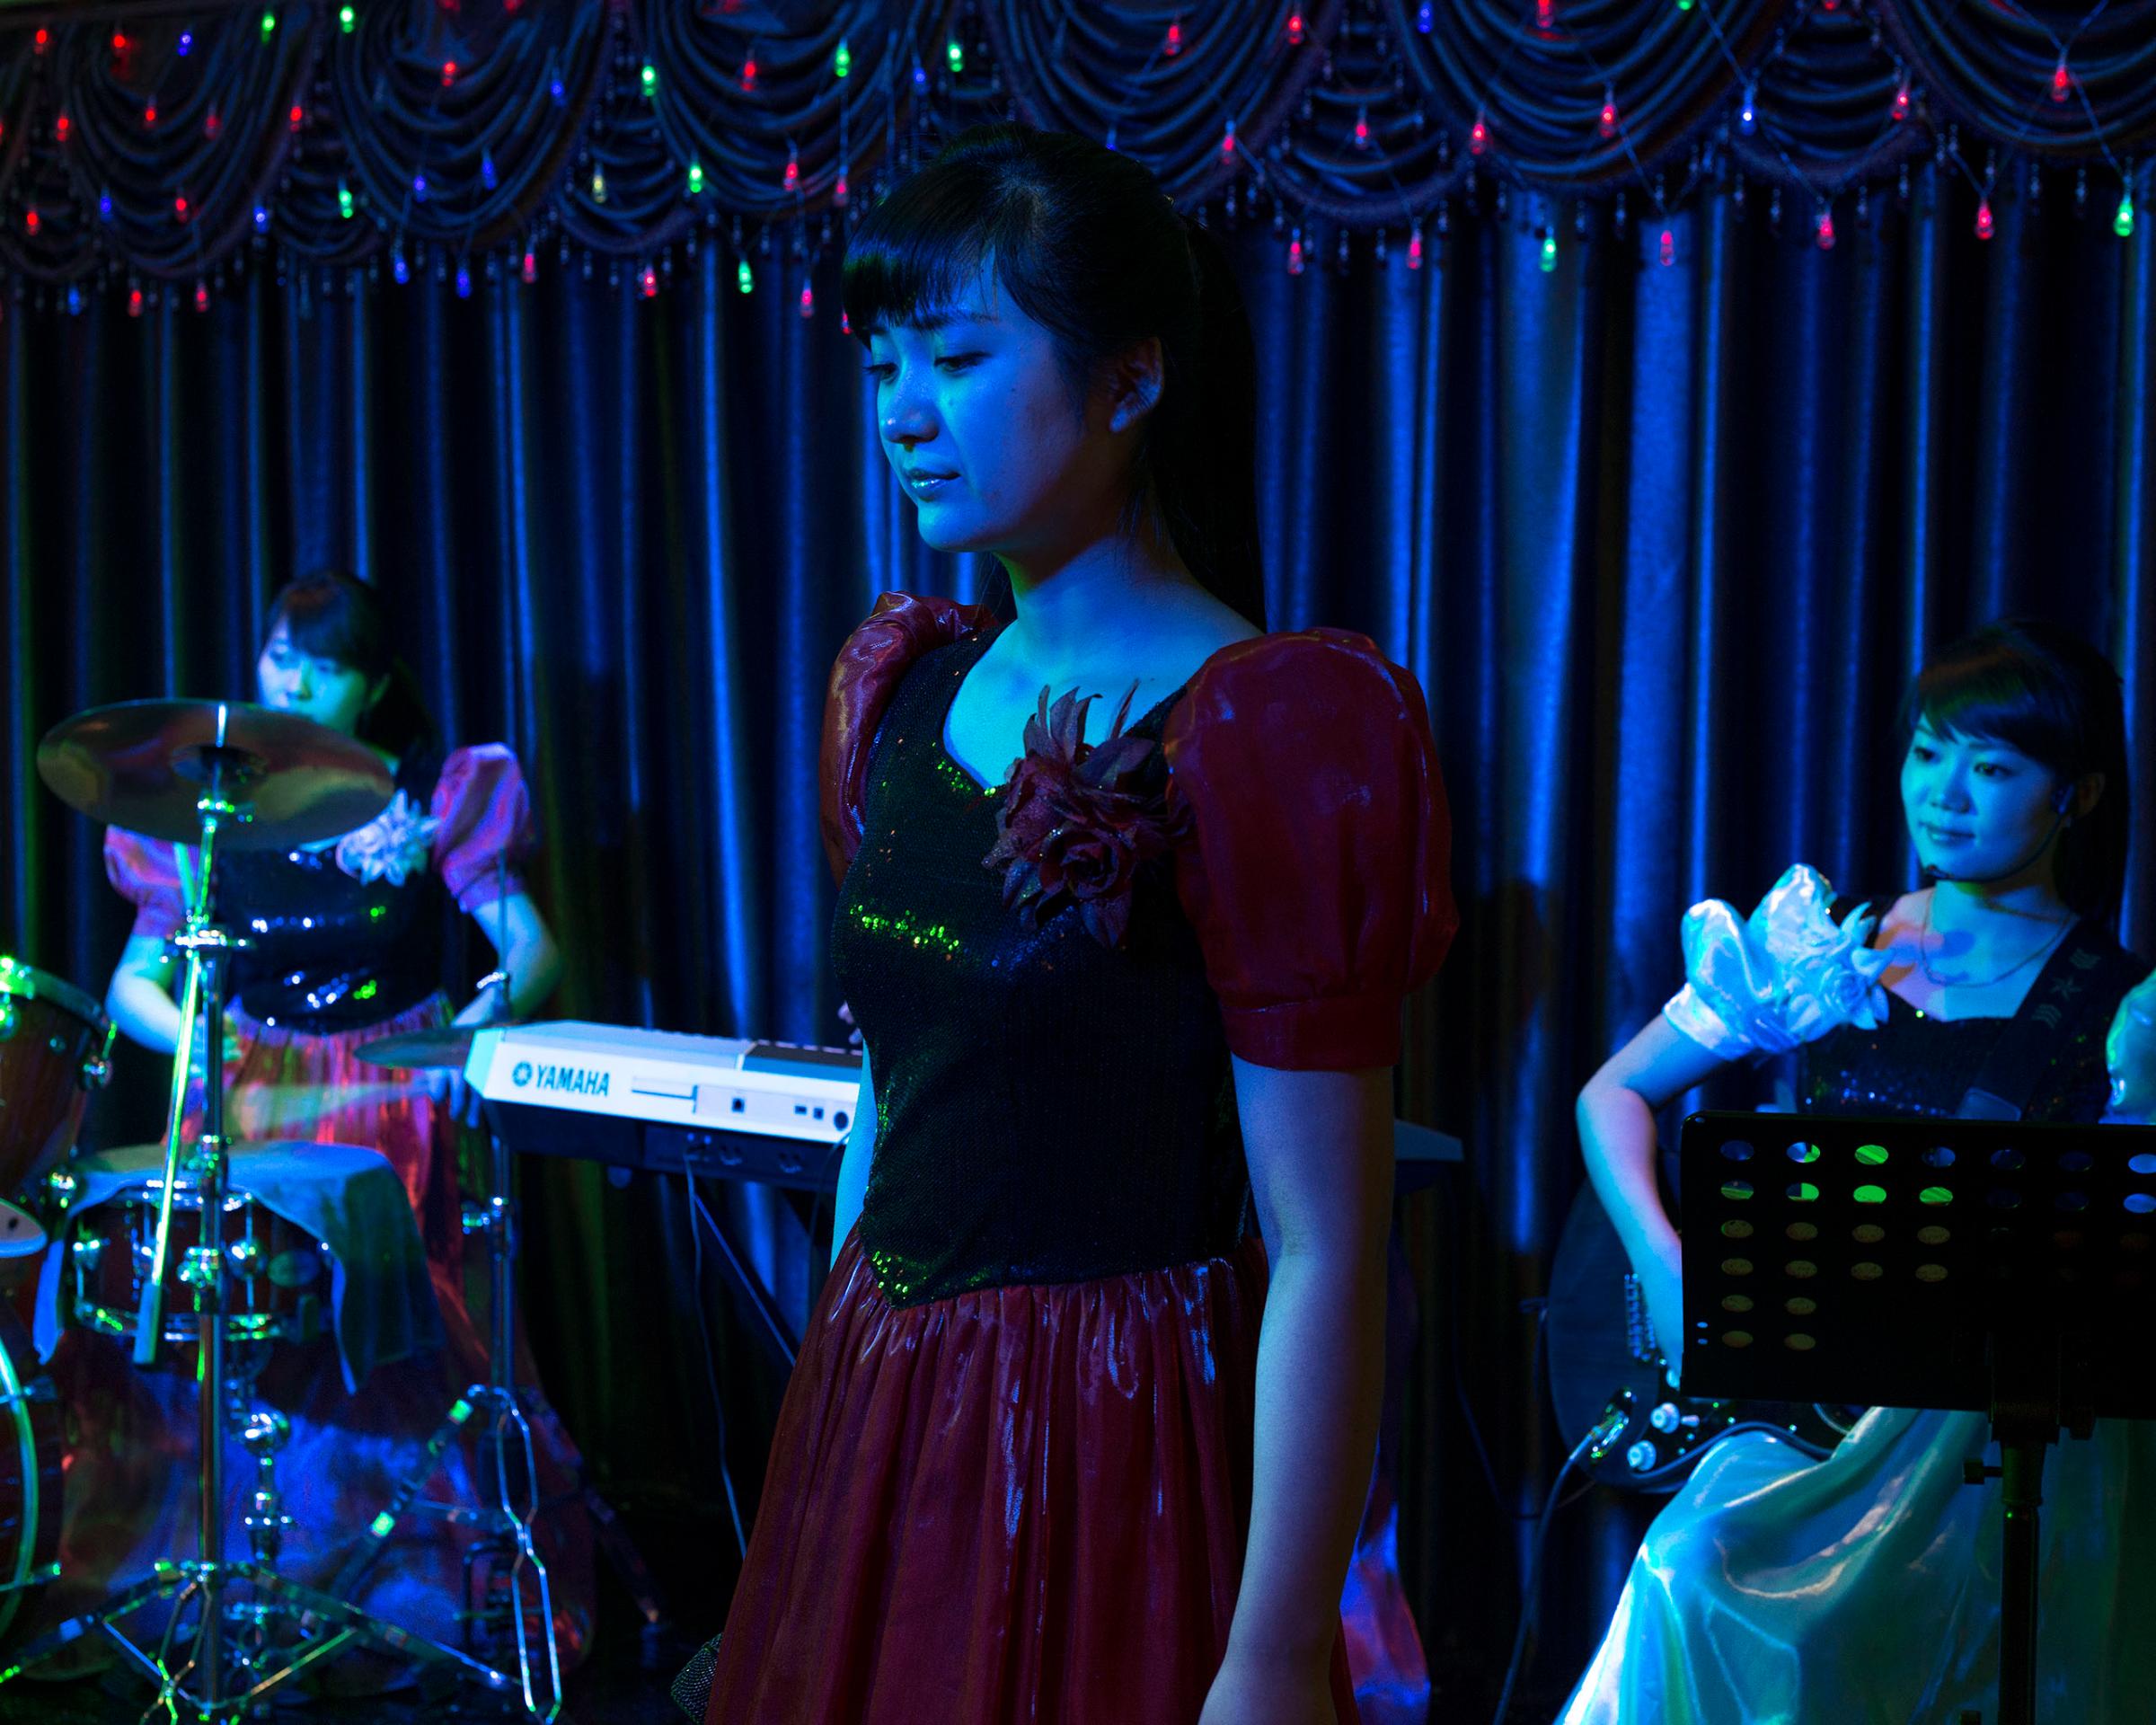 A North Korean performer at a traditional musical show in a North Korean restaurant near Tumen, China.